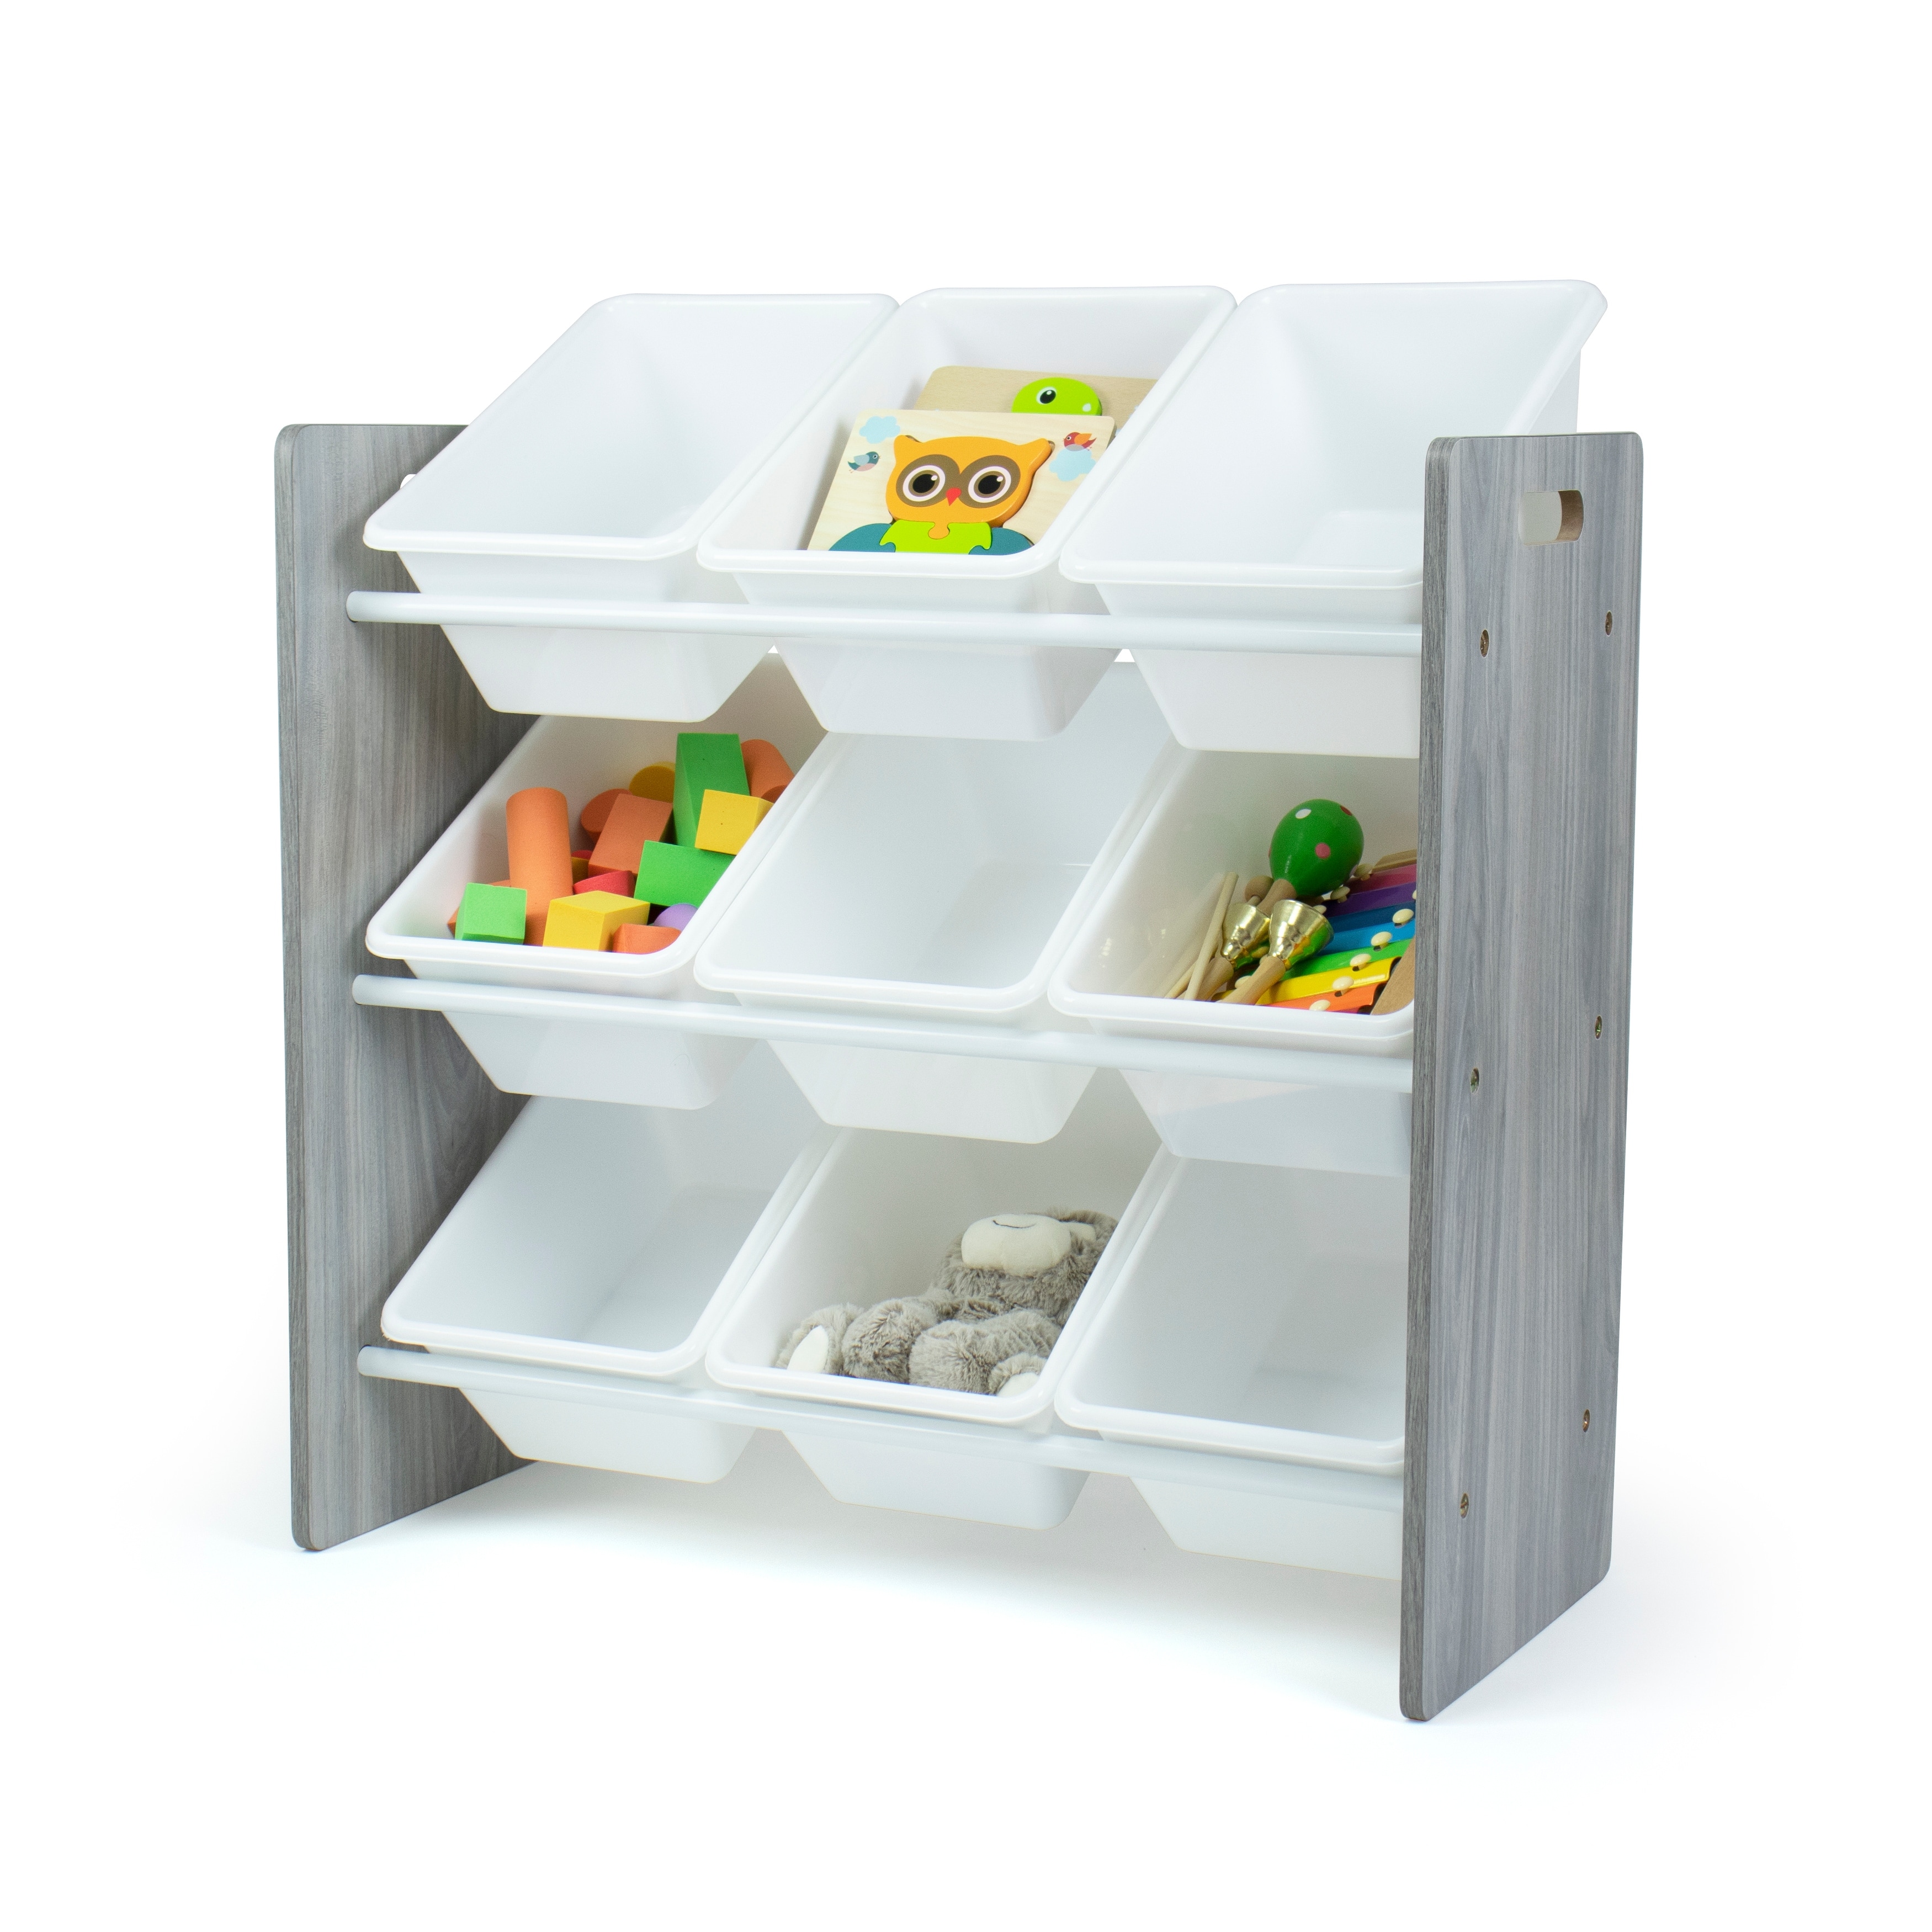 https://ak1.ostkcdn.com/images/products/is/images/direct/206dbddac29cf8282cdb43f2c68d56abf6e5255a/Humble-Crew-Slate-Toy-Storage-Organizer-with-9-Storage-Bins%2C-Grey-Wood-Grain-White.jpg